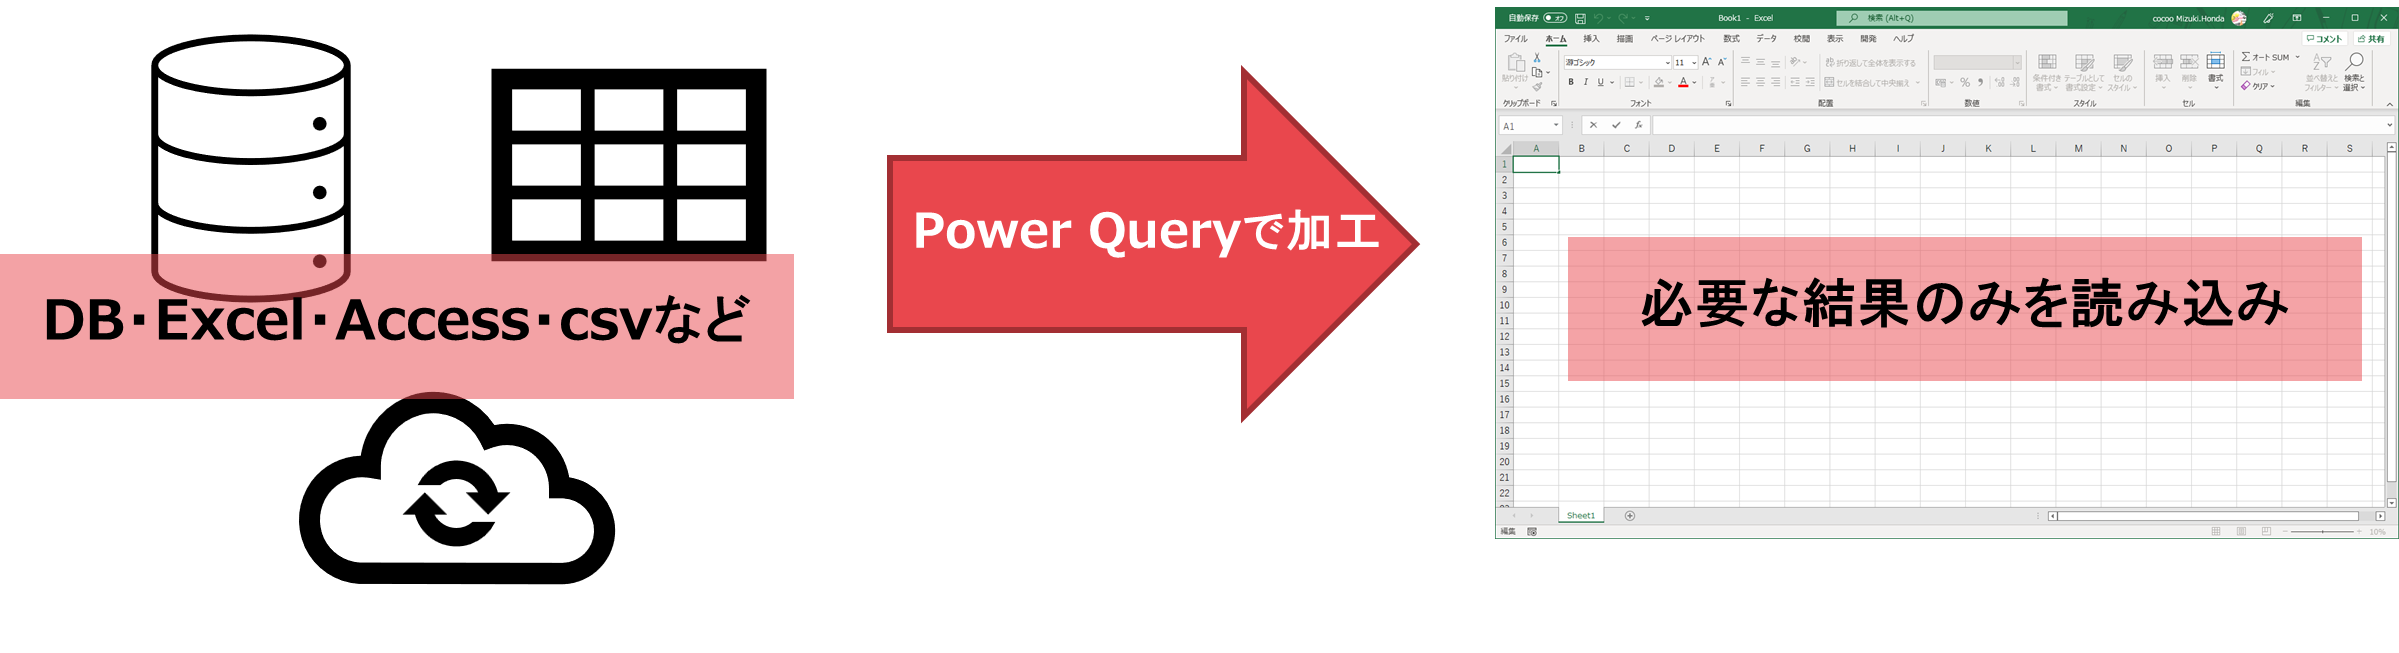 PowerQueryでのデータ作業は、PowerQueryで加工が出来ることを表した図